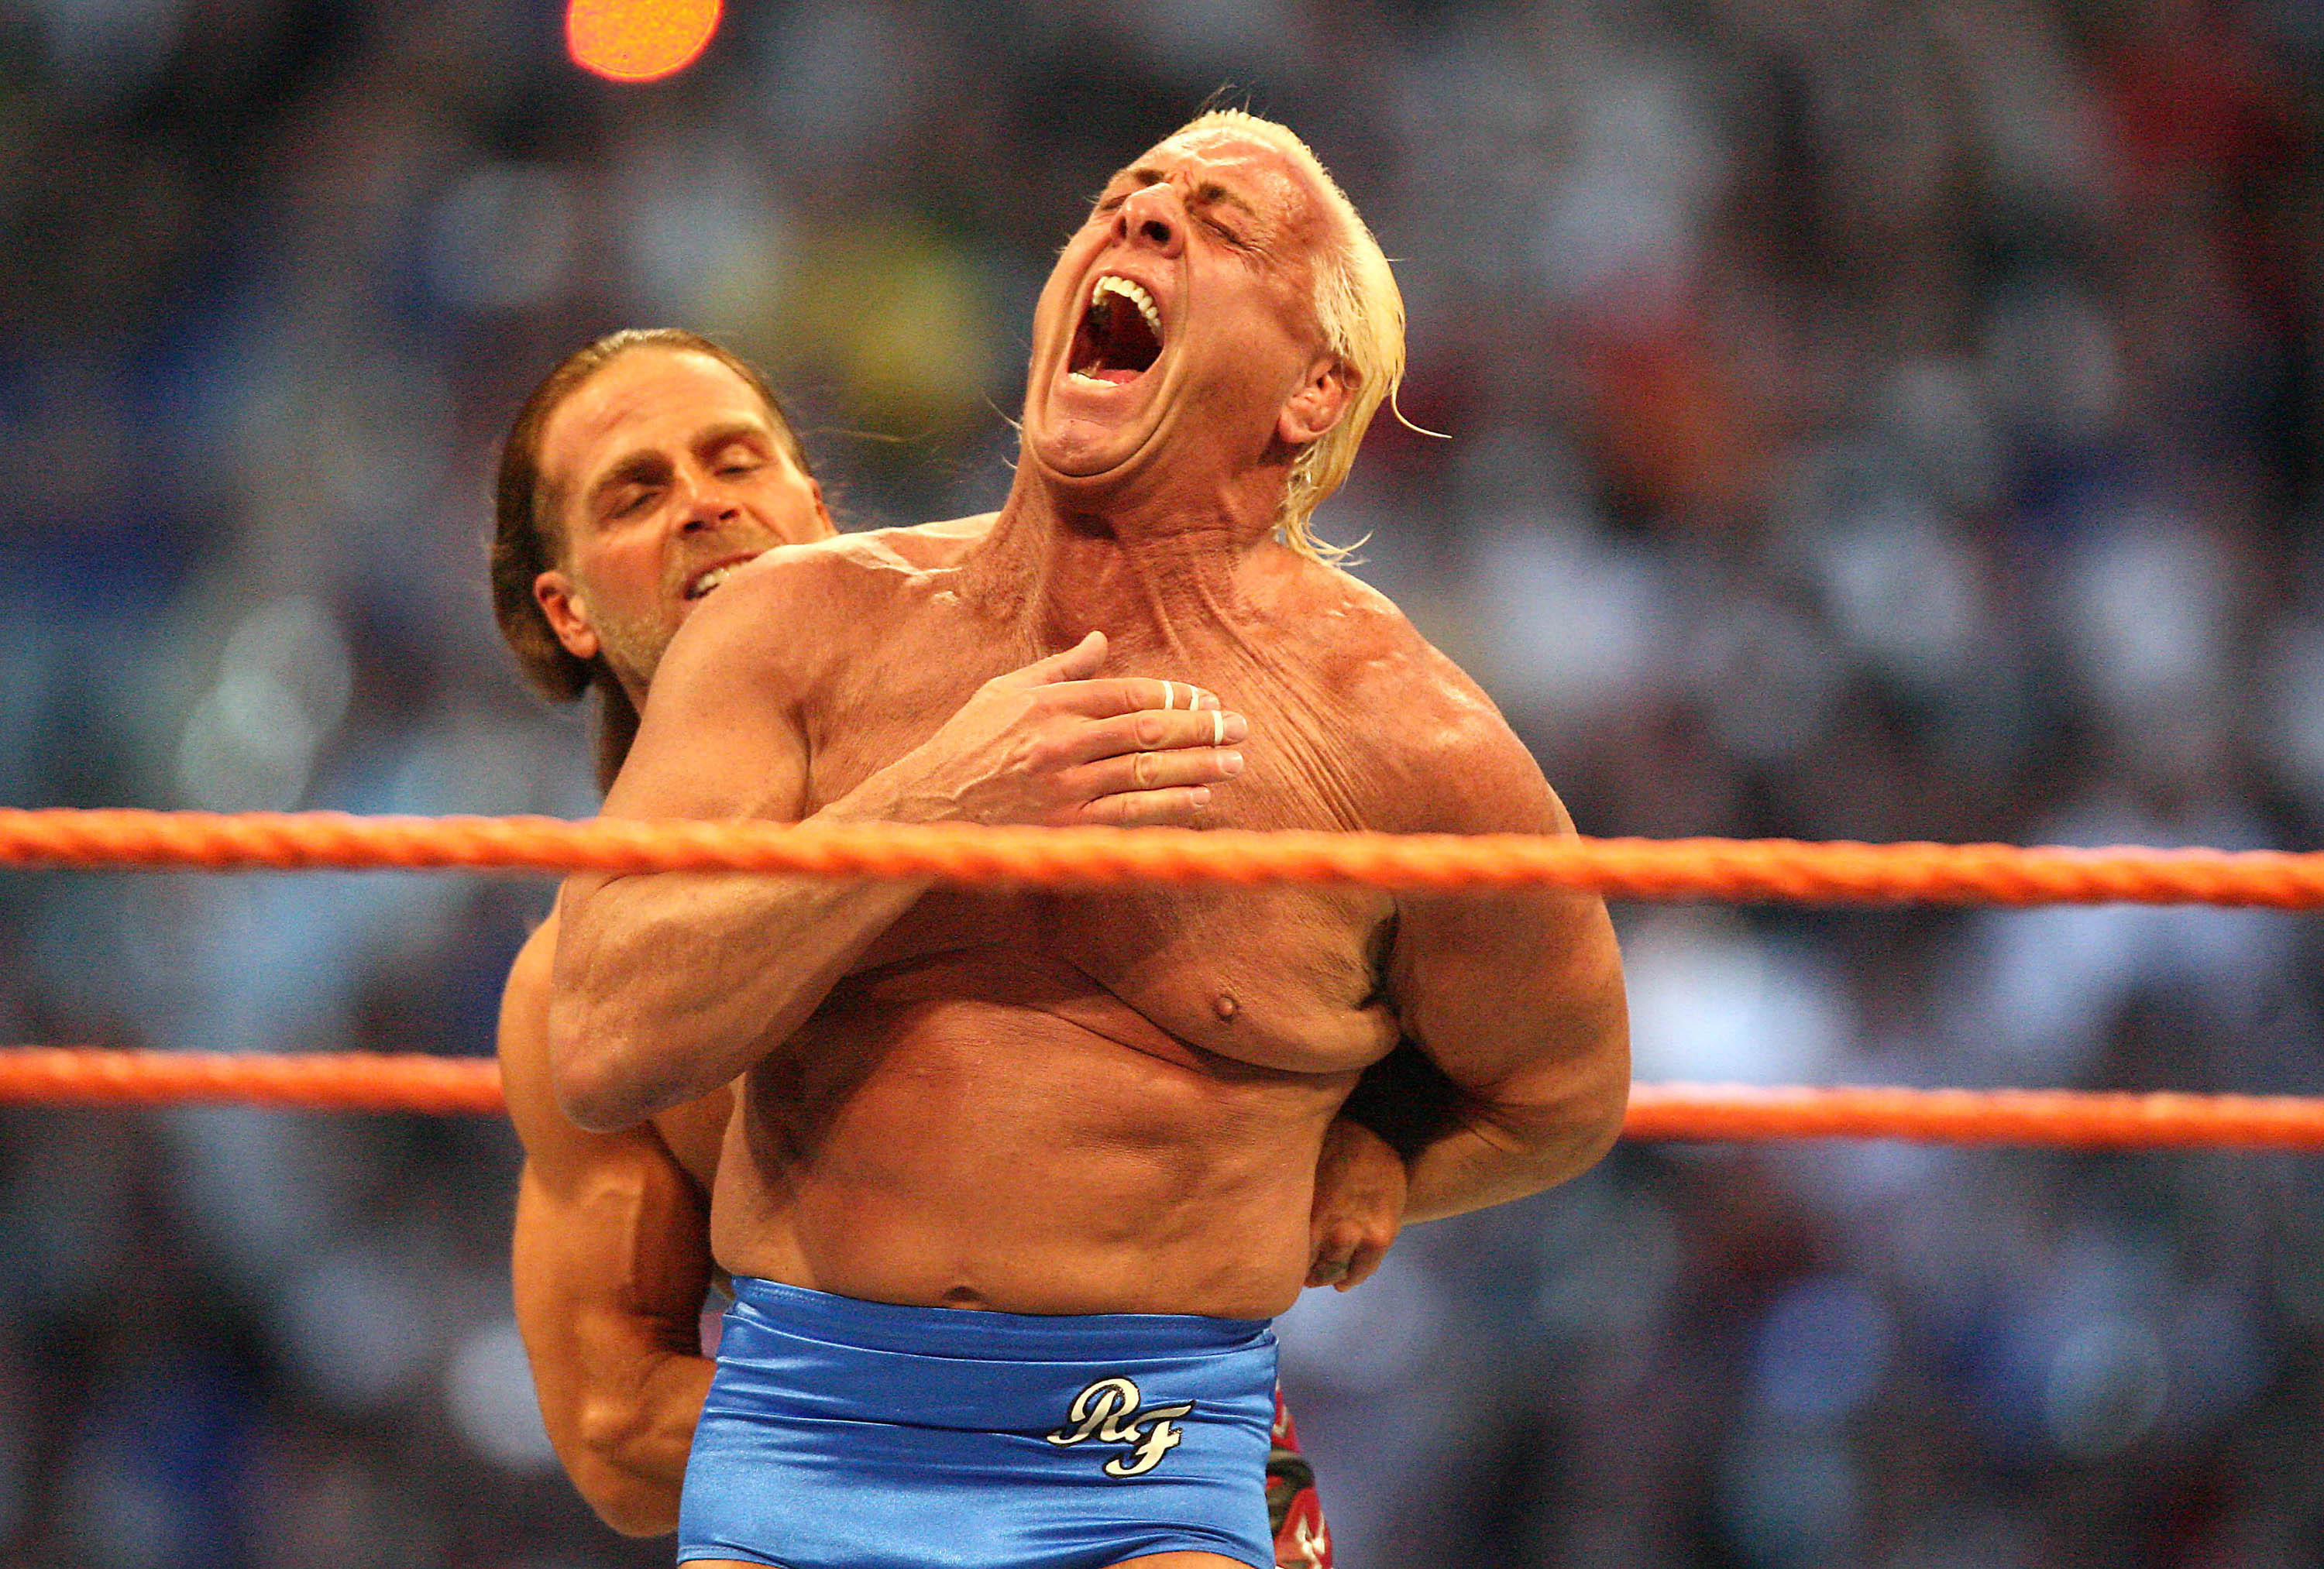 Shawn Michaels vs. Ric Flair at Wrestlemania 24